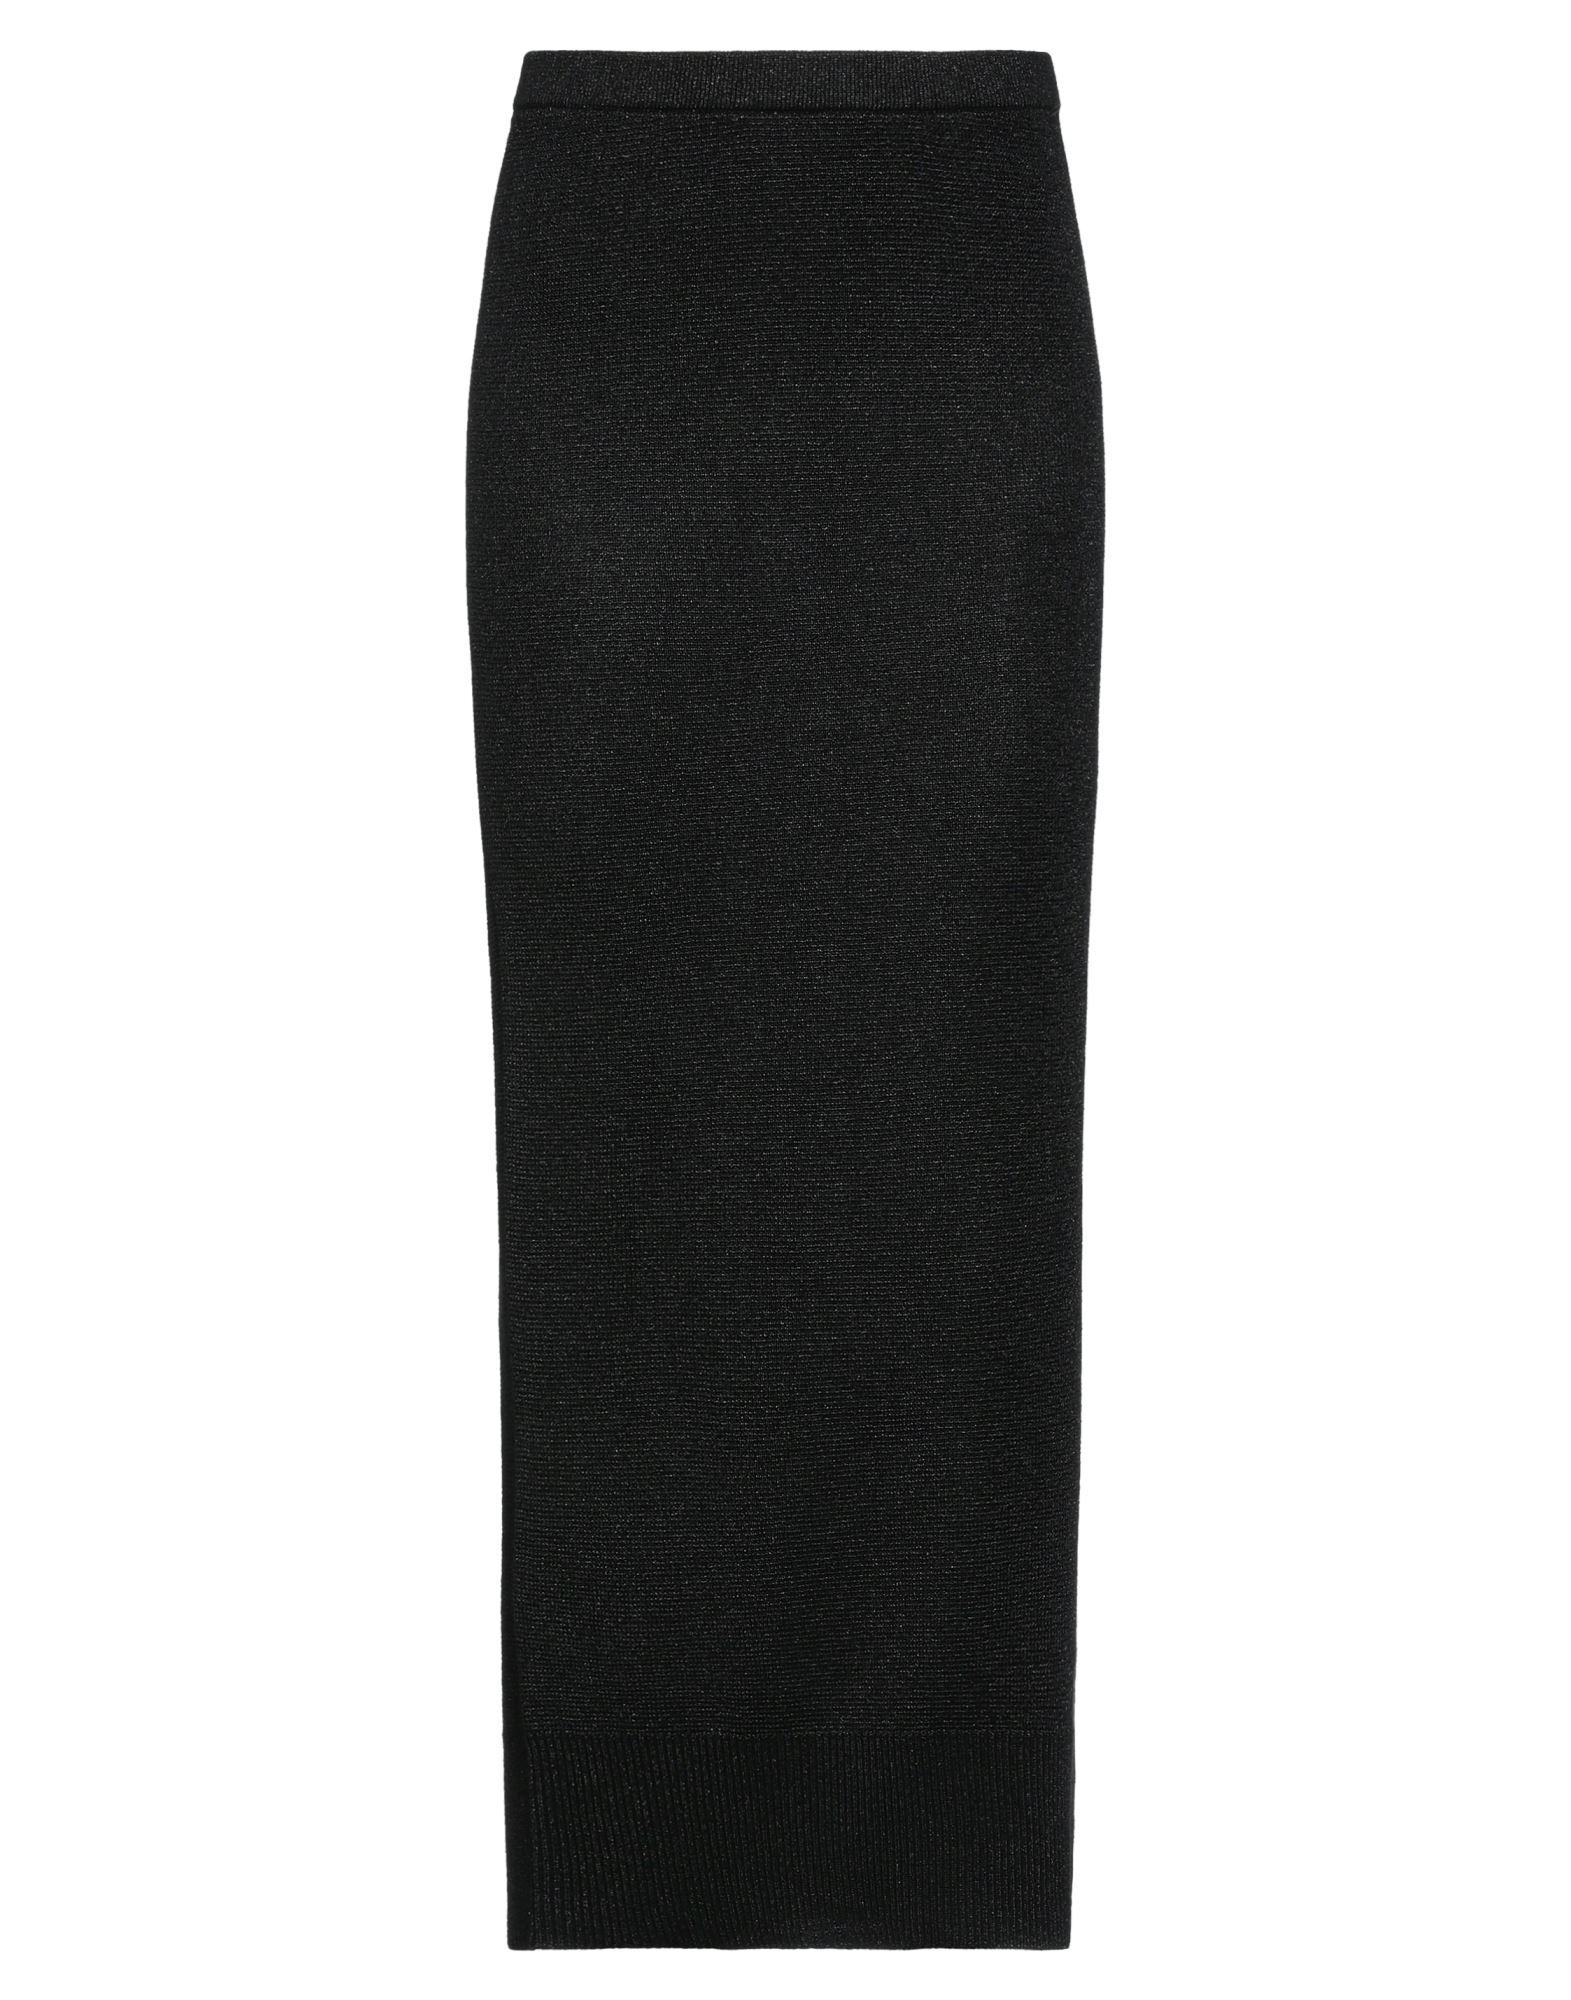 Armani Exchange Long Skirt in Black | Lyst